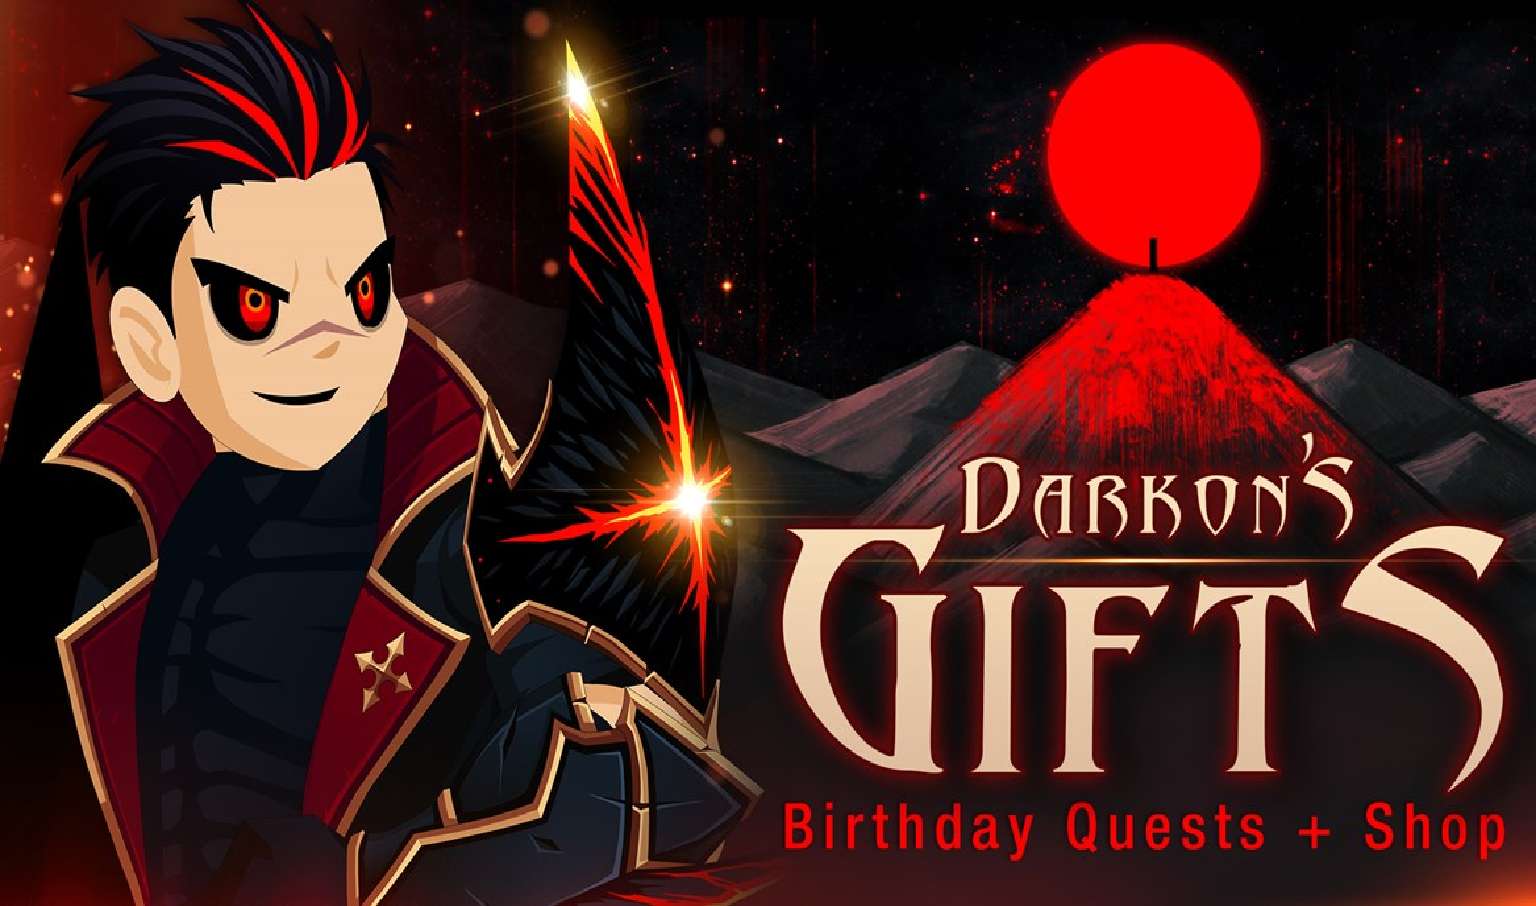 Darkon’s Birthday Shop Finally Comes To AdventureQuest Worlds With Unique Items